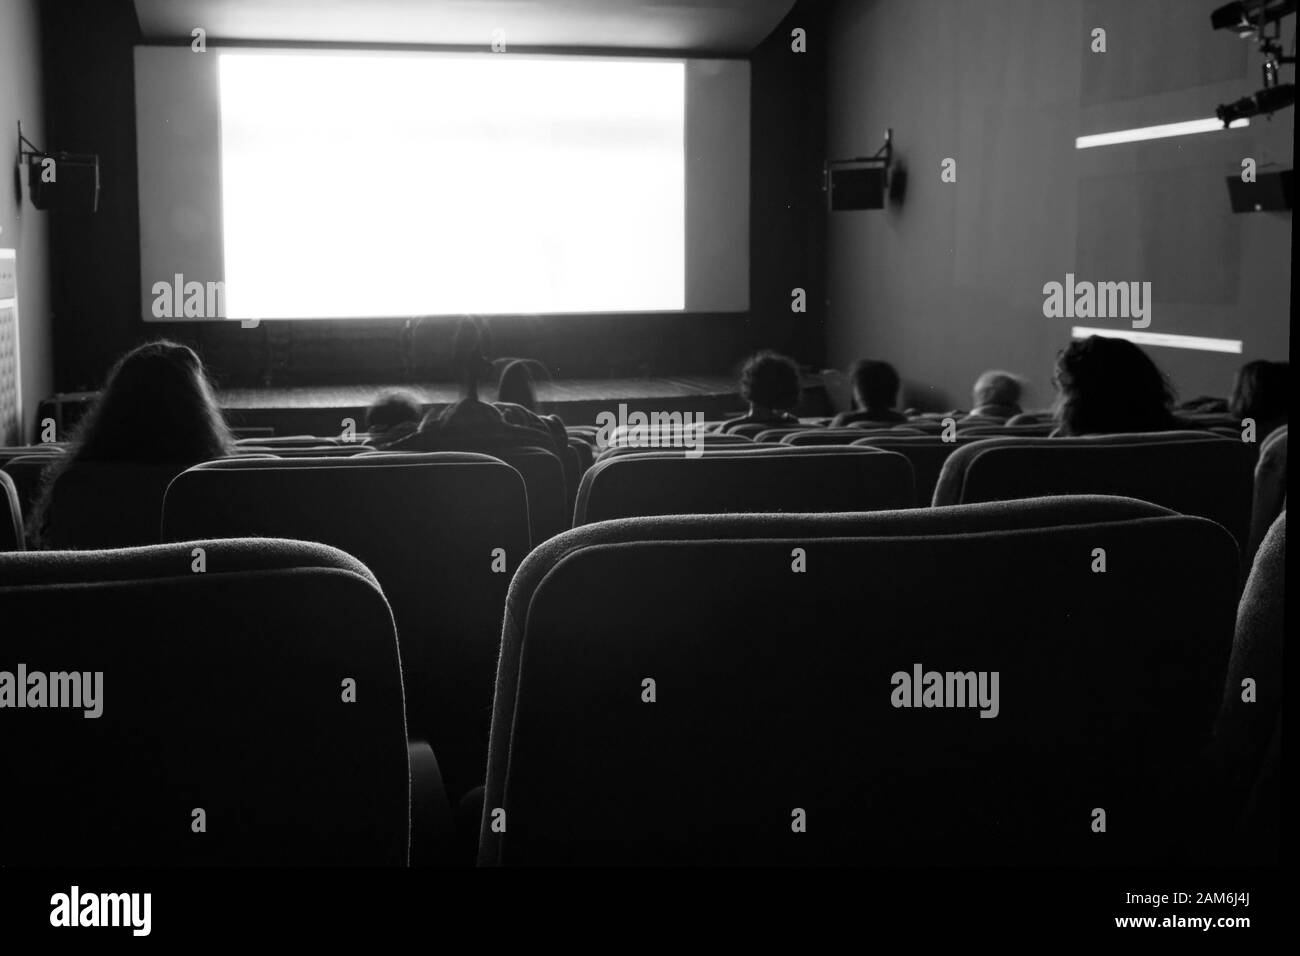 People watching movie in cinema Stock Photo